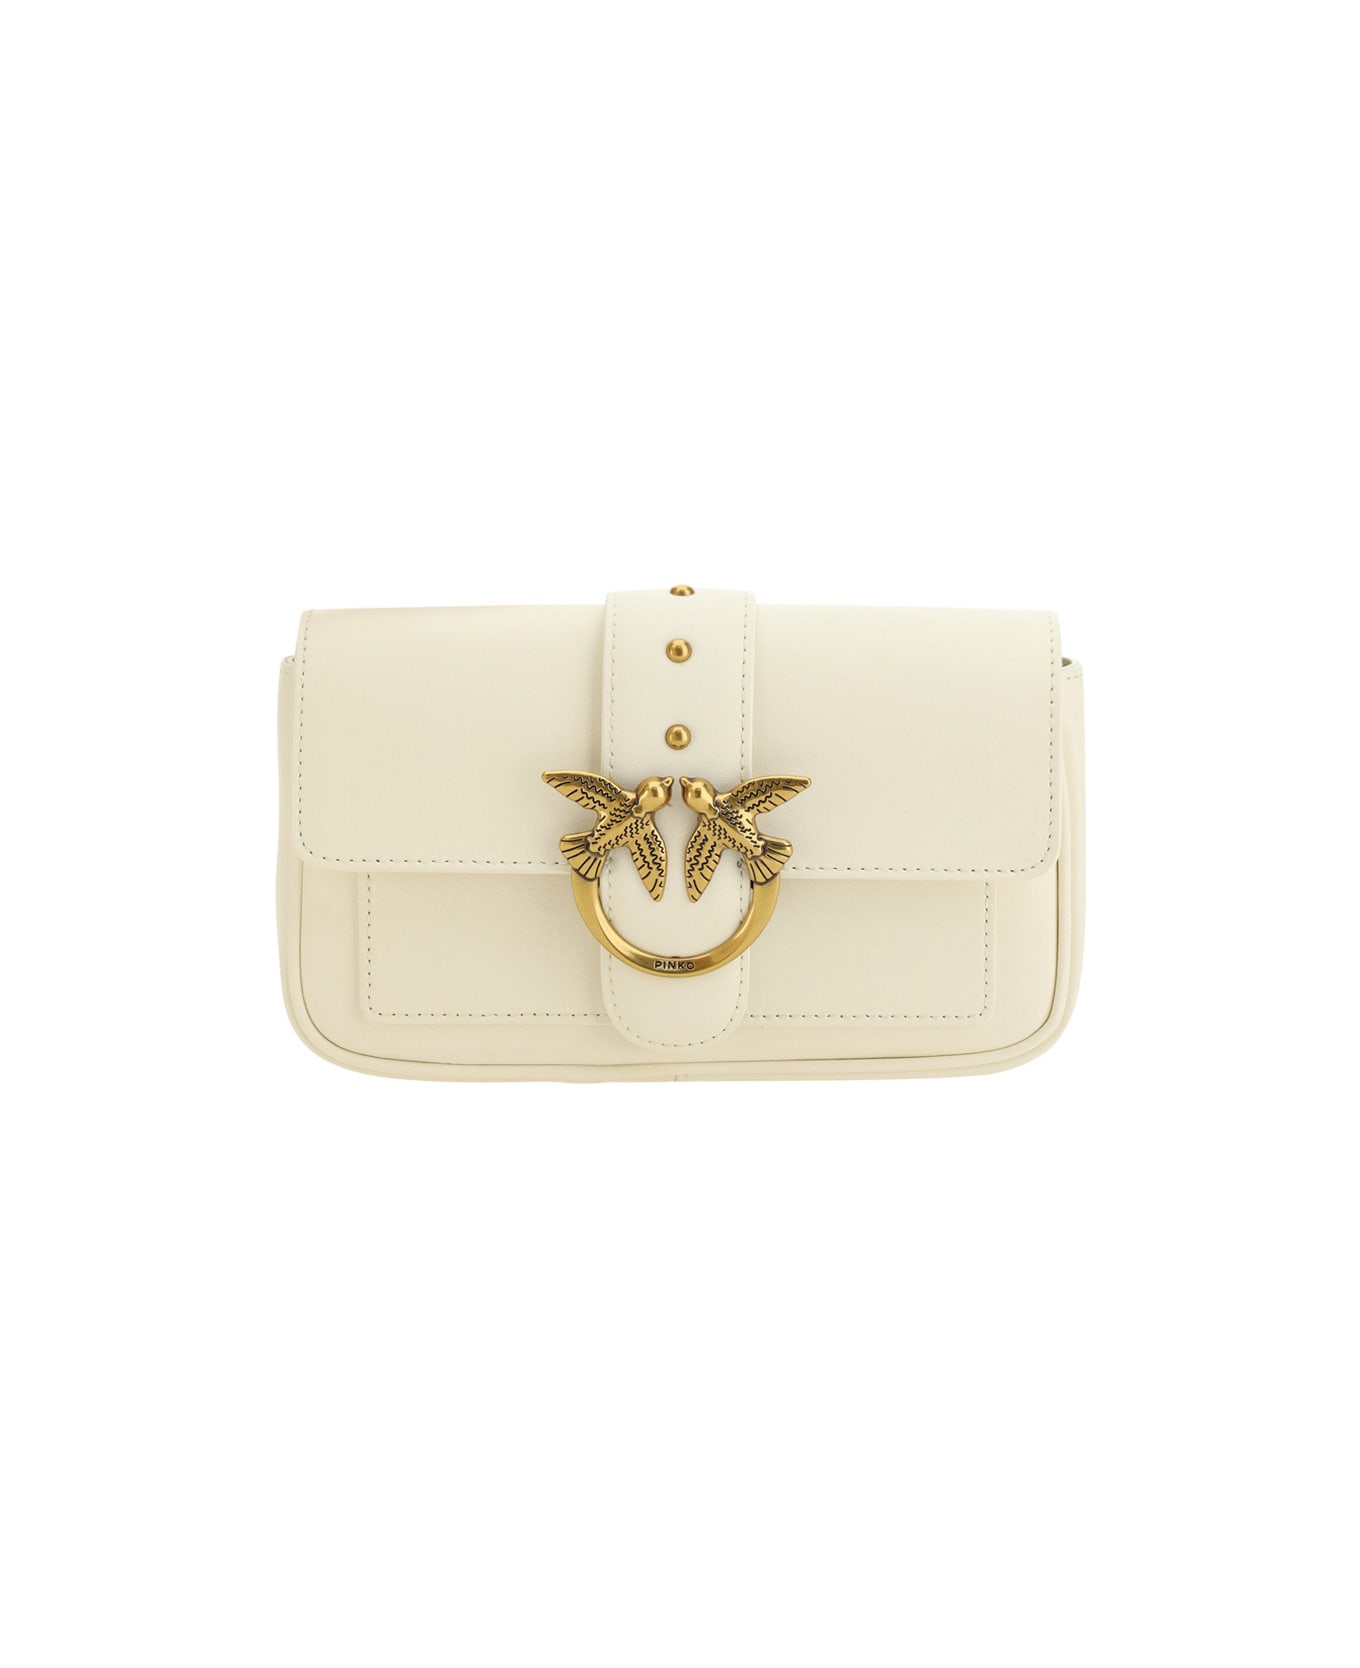 Pinko Love One Pocket Crossbody Bag - Q Bianco Seta Antique Gold